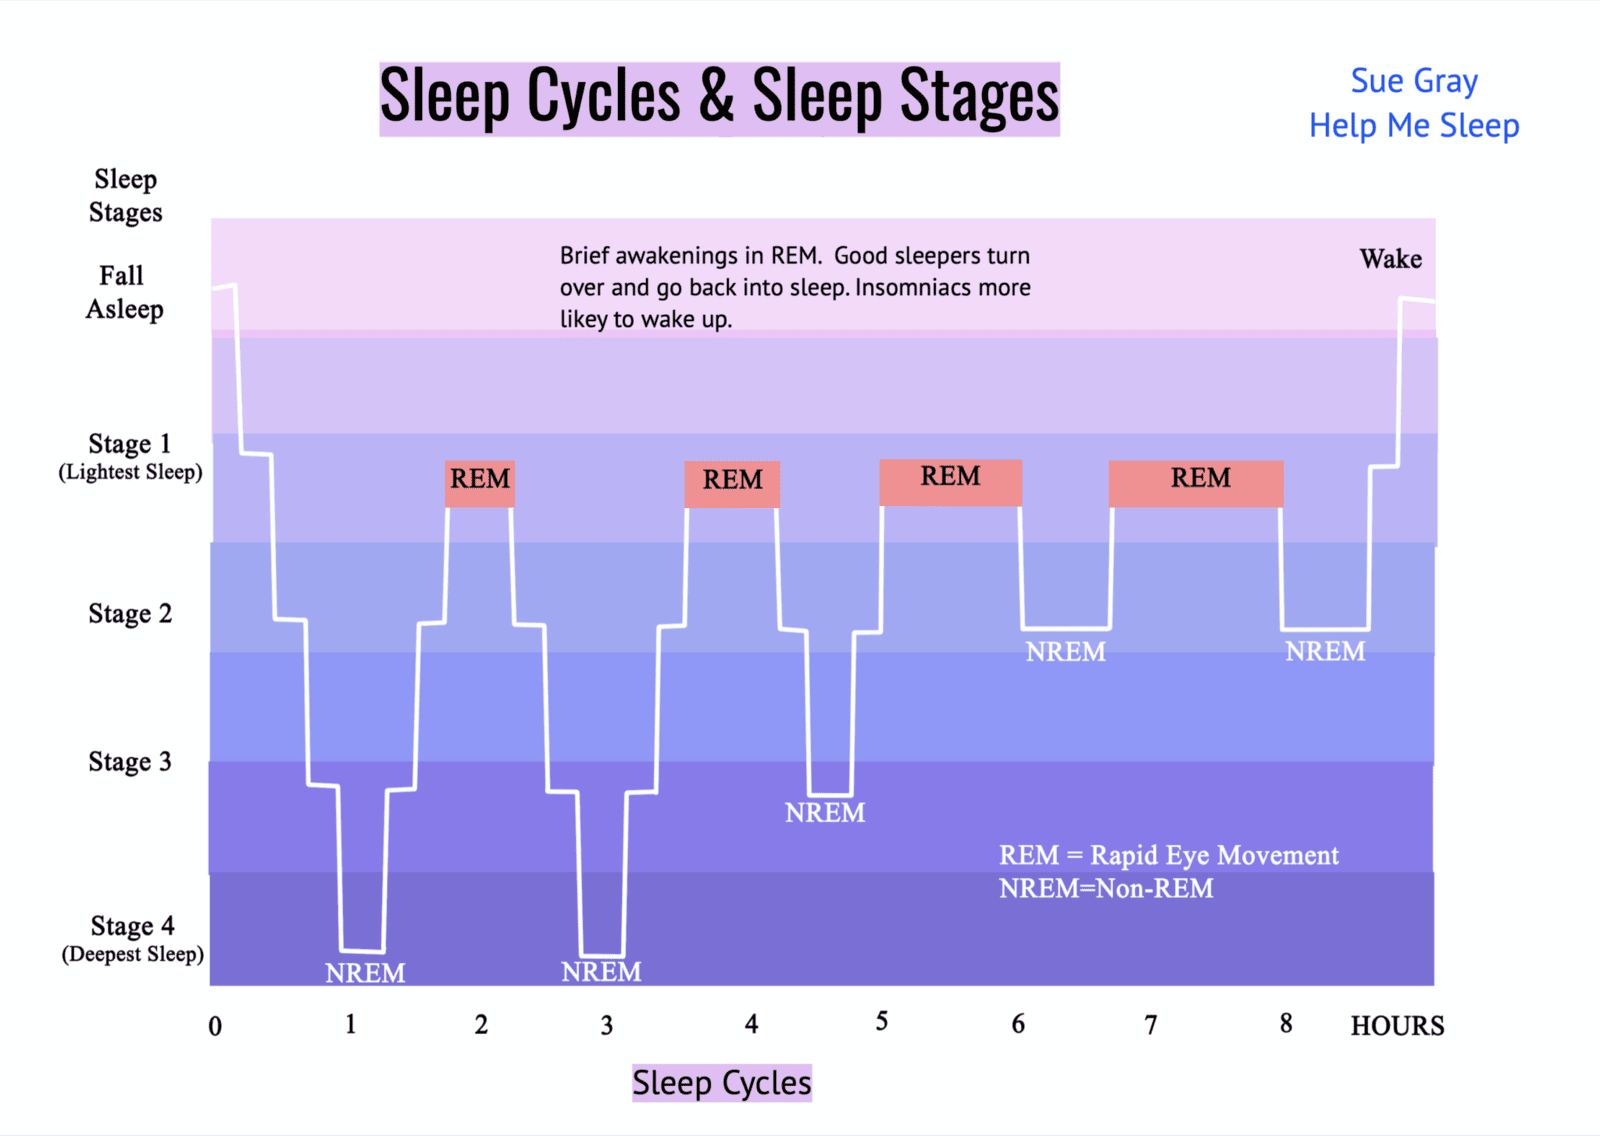 Sleep Stages and Sleep Cycles - Sue Gray, Help Me Sleep